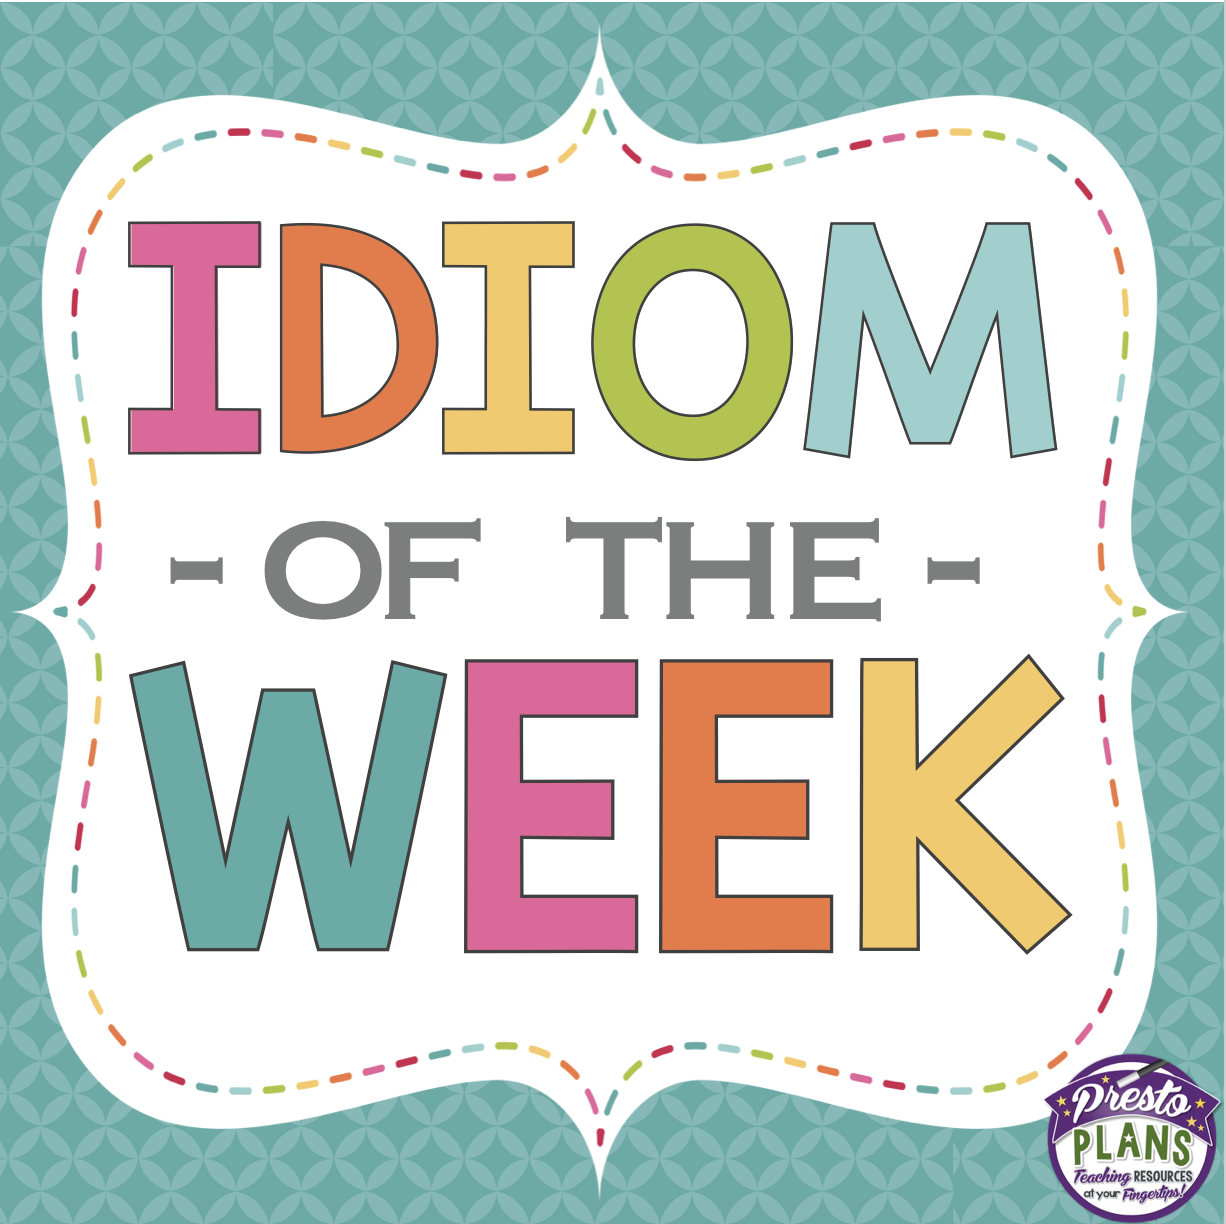 Idiom of the week